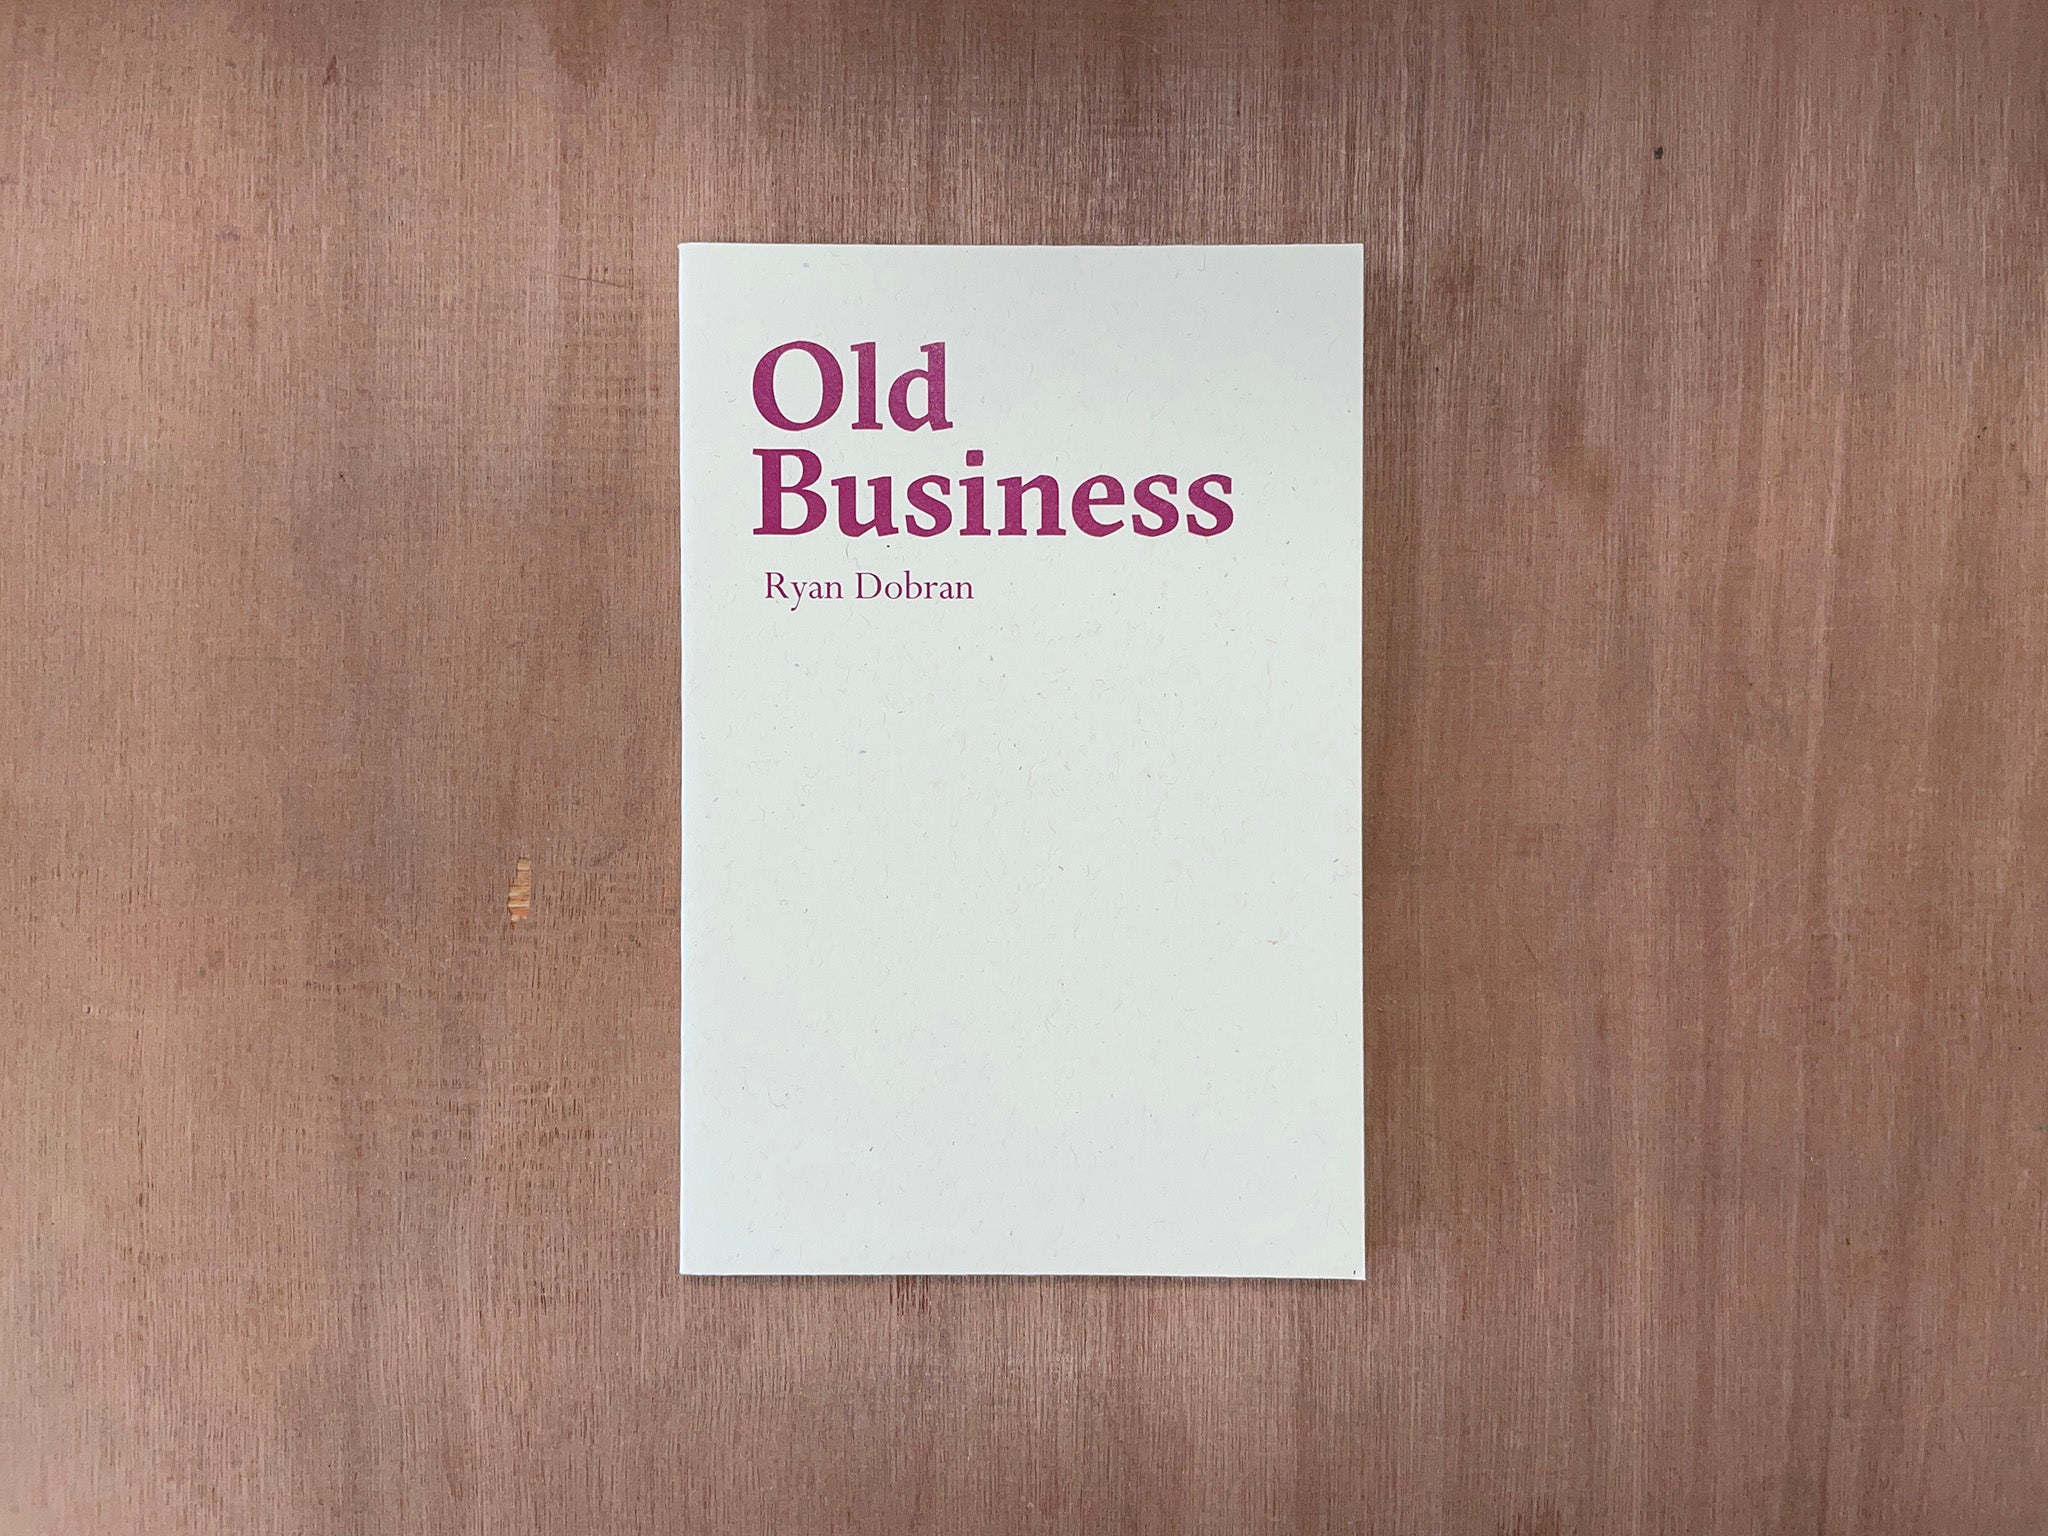 OLD BUSINESS by Ryan Dobran